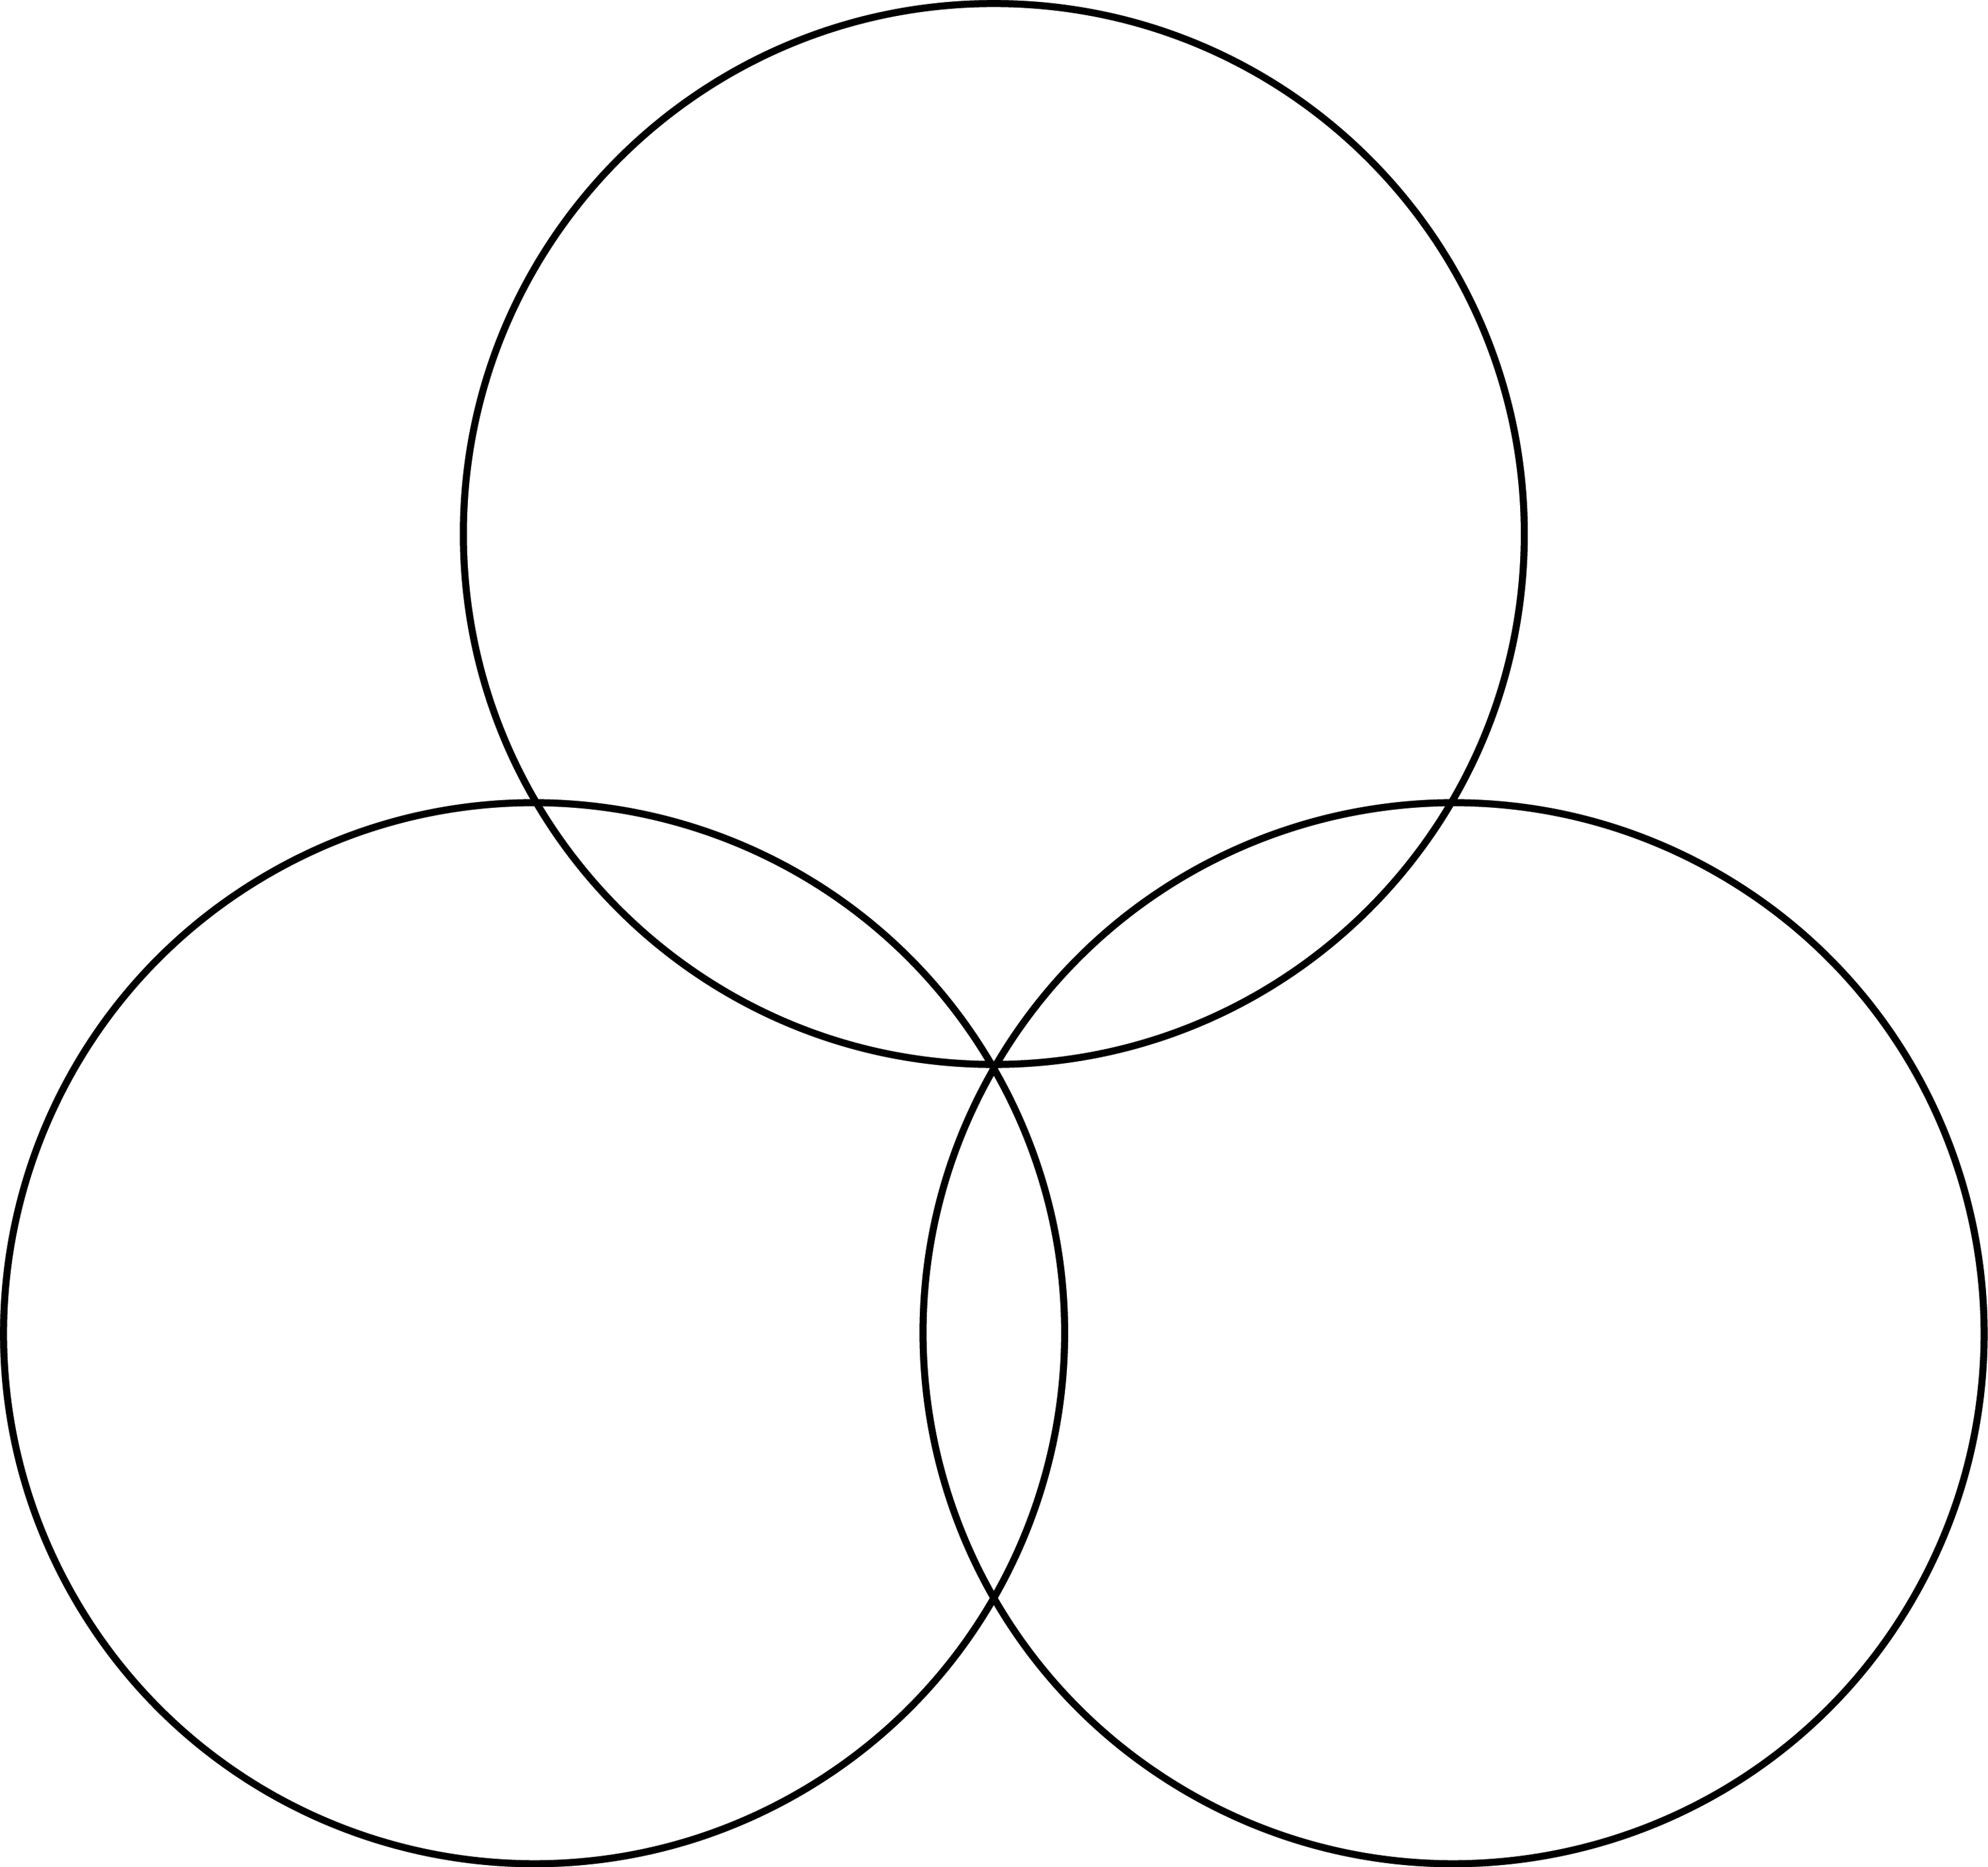 Circular Rosette With 3 Petals | ClipArt ETC